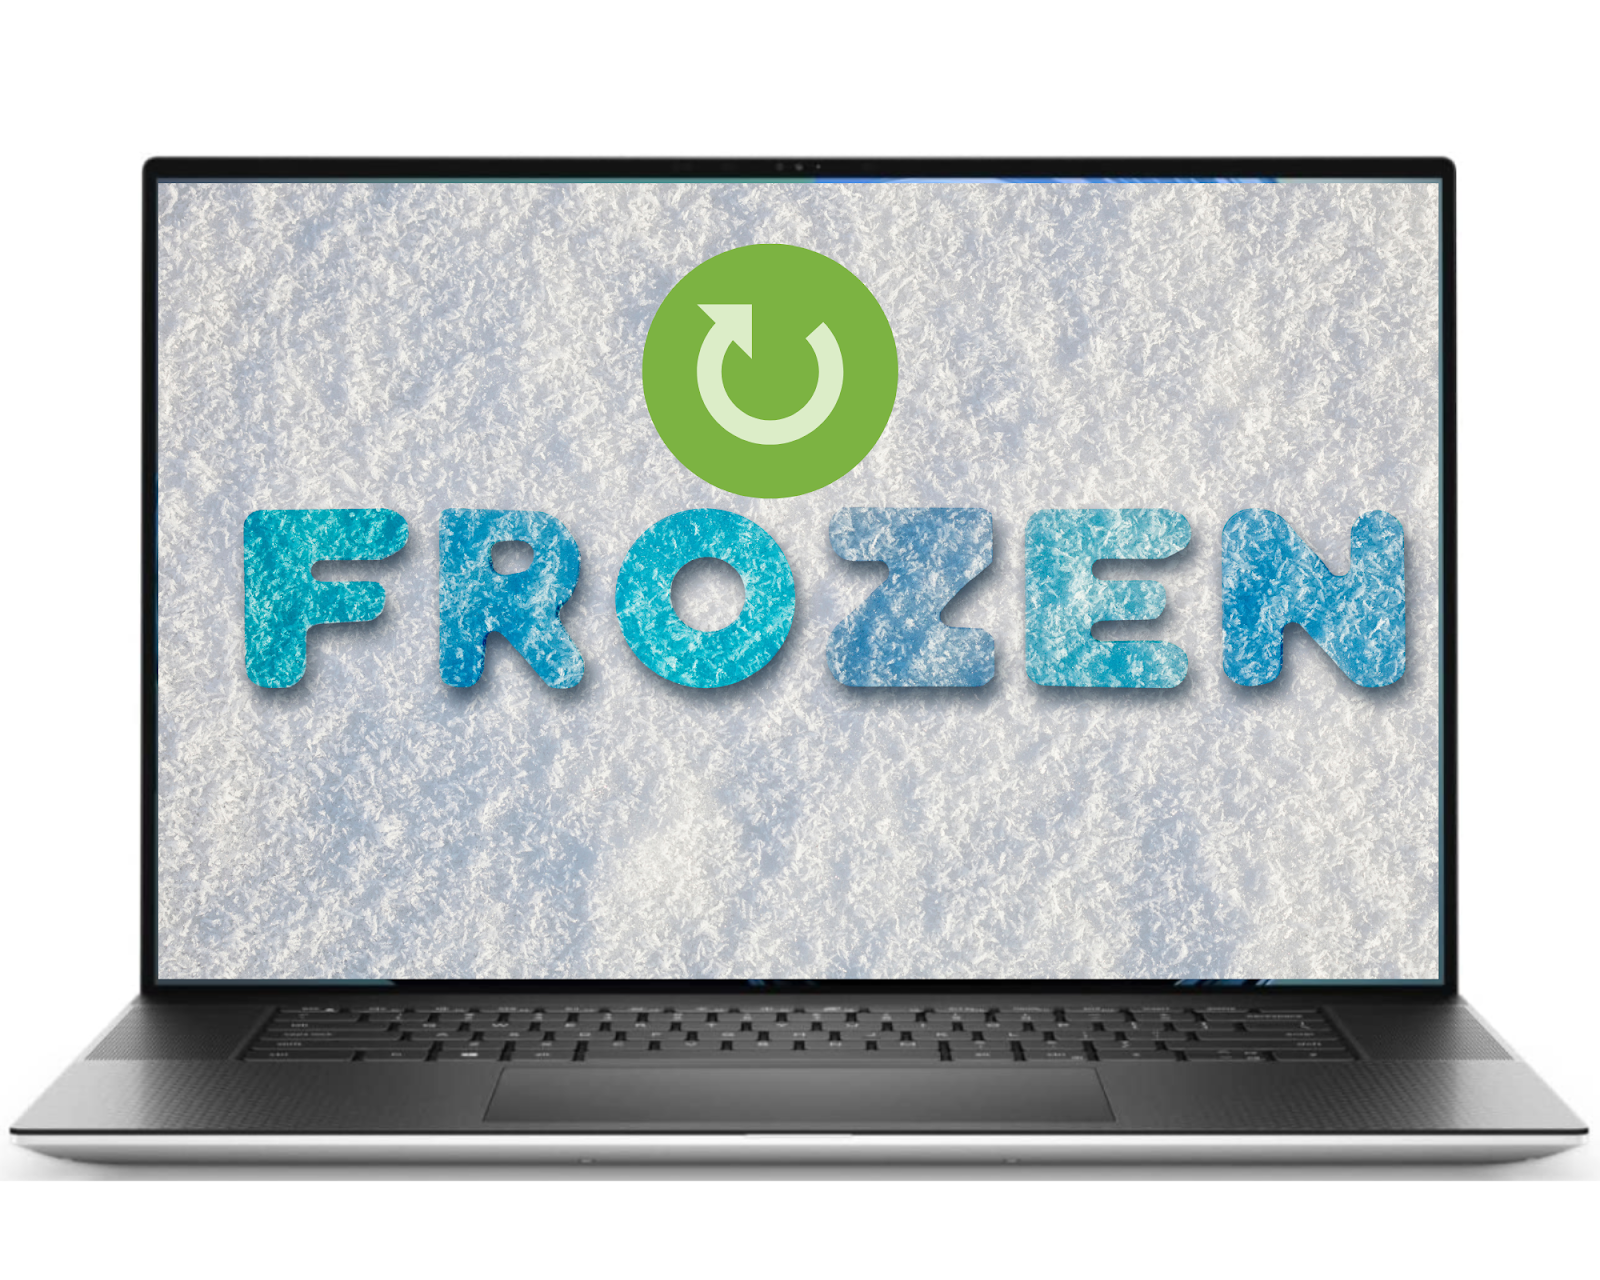 How to Restart Dell Laptop When Frozen